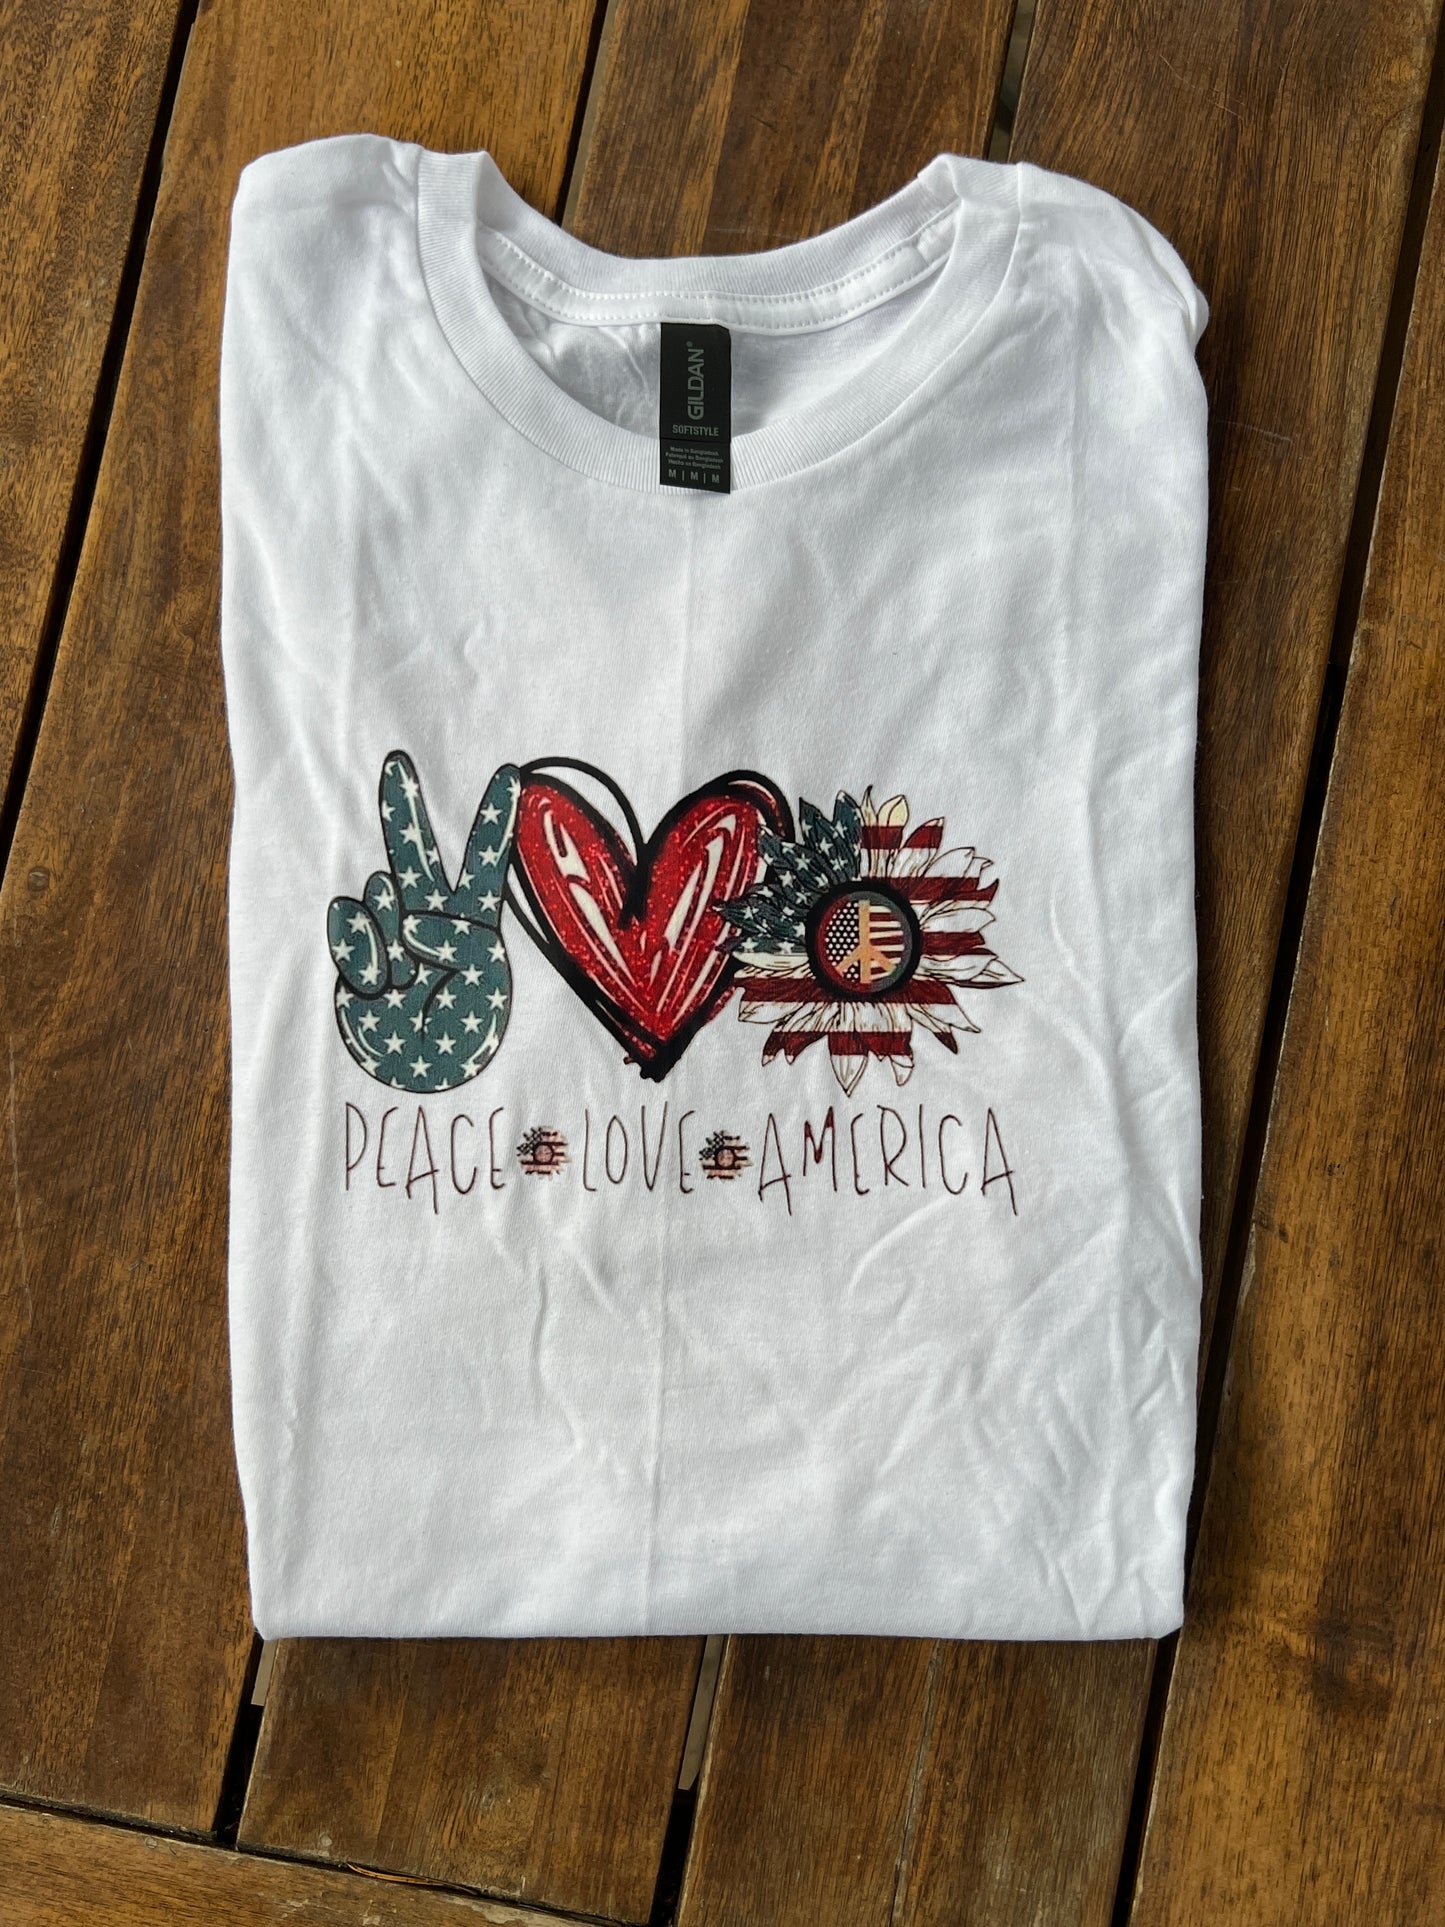 Peace Love America soft style shirt!